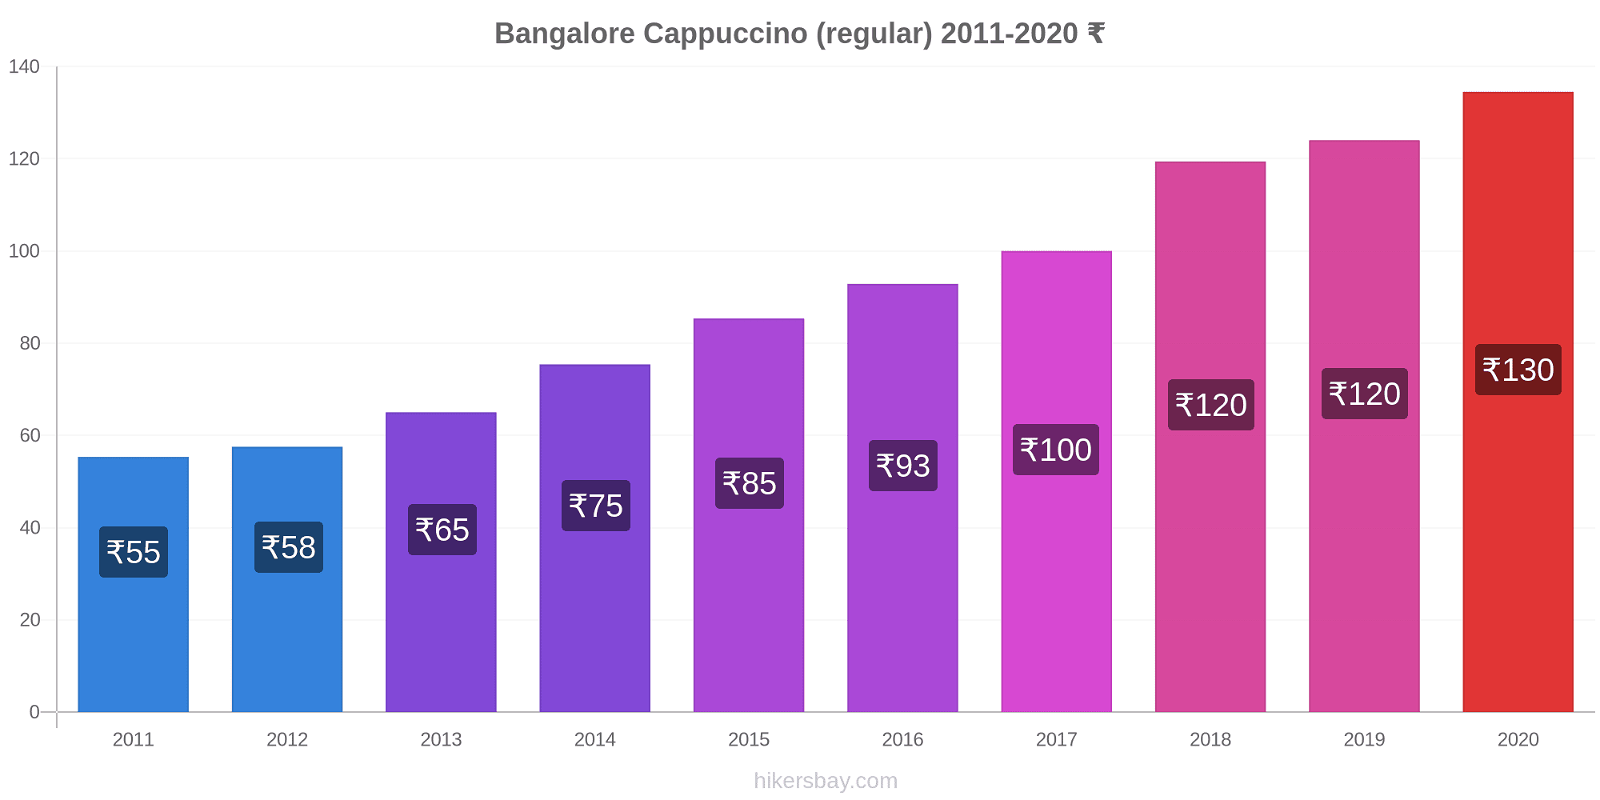 Bangalore price changes Cappuccino (regular) hikersbay.com